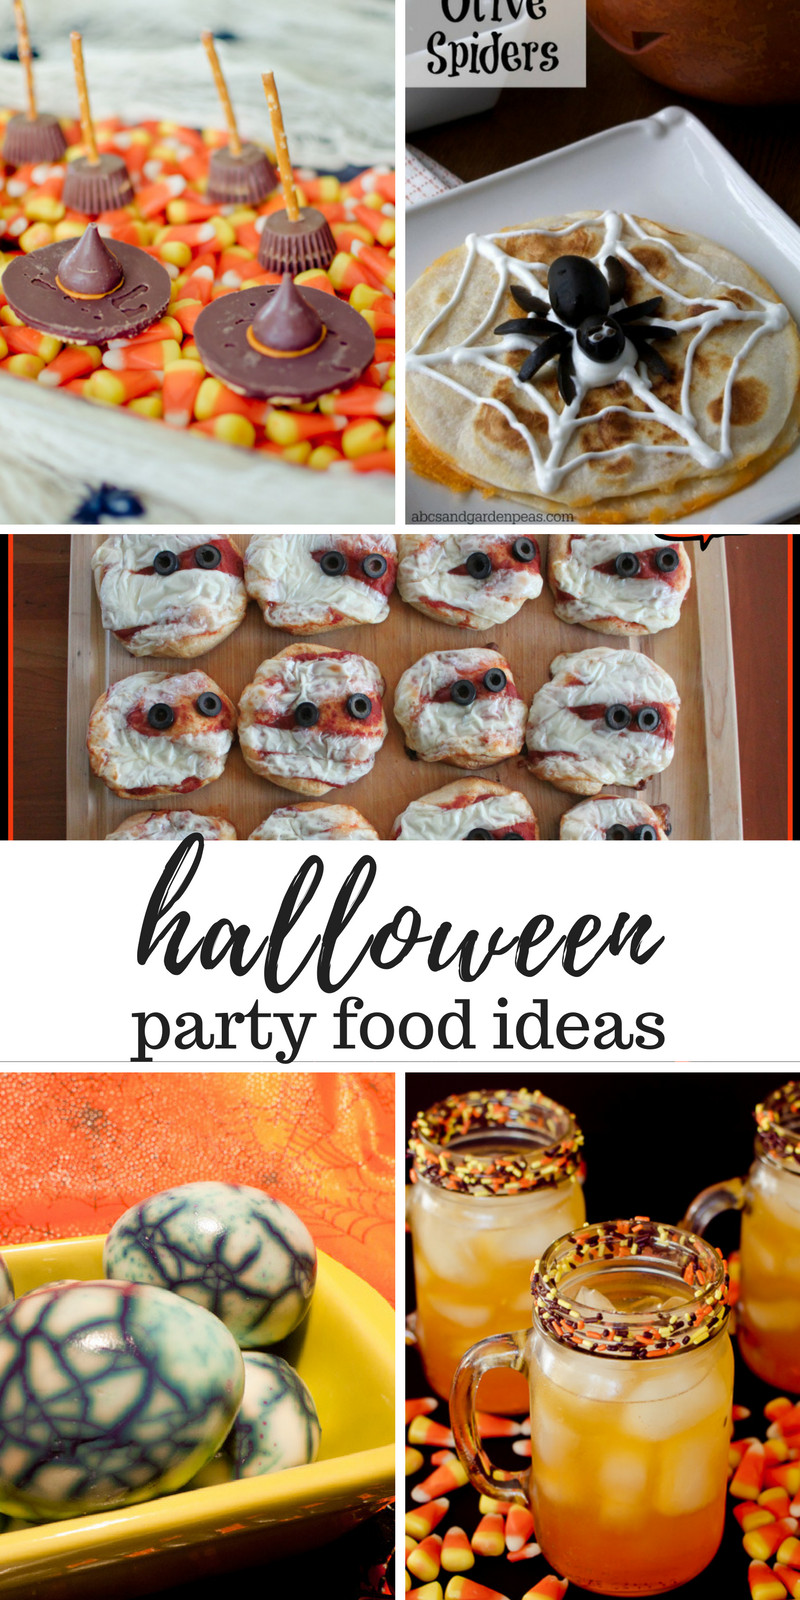 Party Food Ideas Pinterest
 Halloween Party Food Ideas